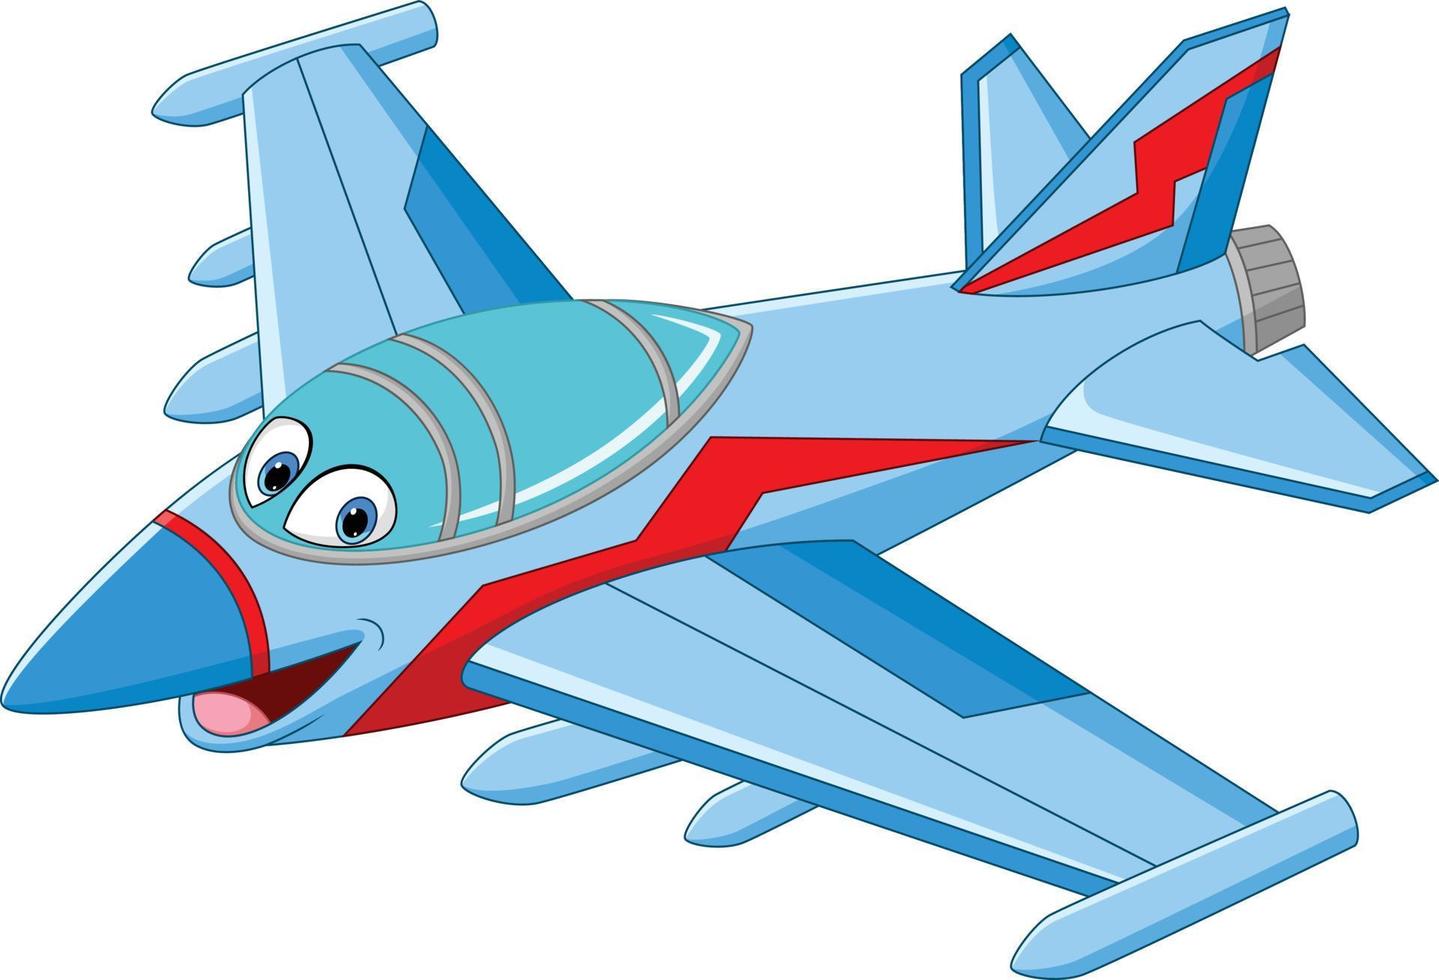 karikatur-jet-kampfflugzeug-maskottchen-charakter vektor